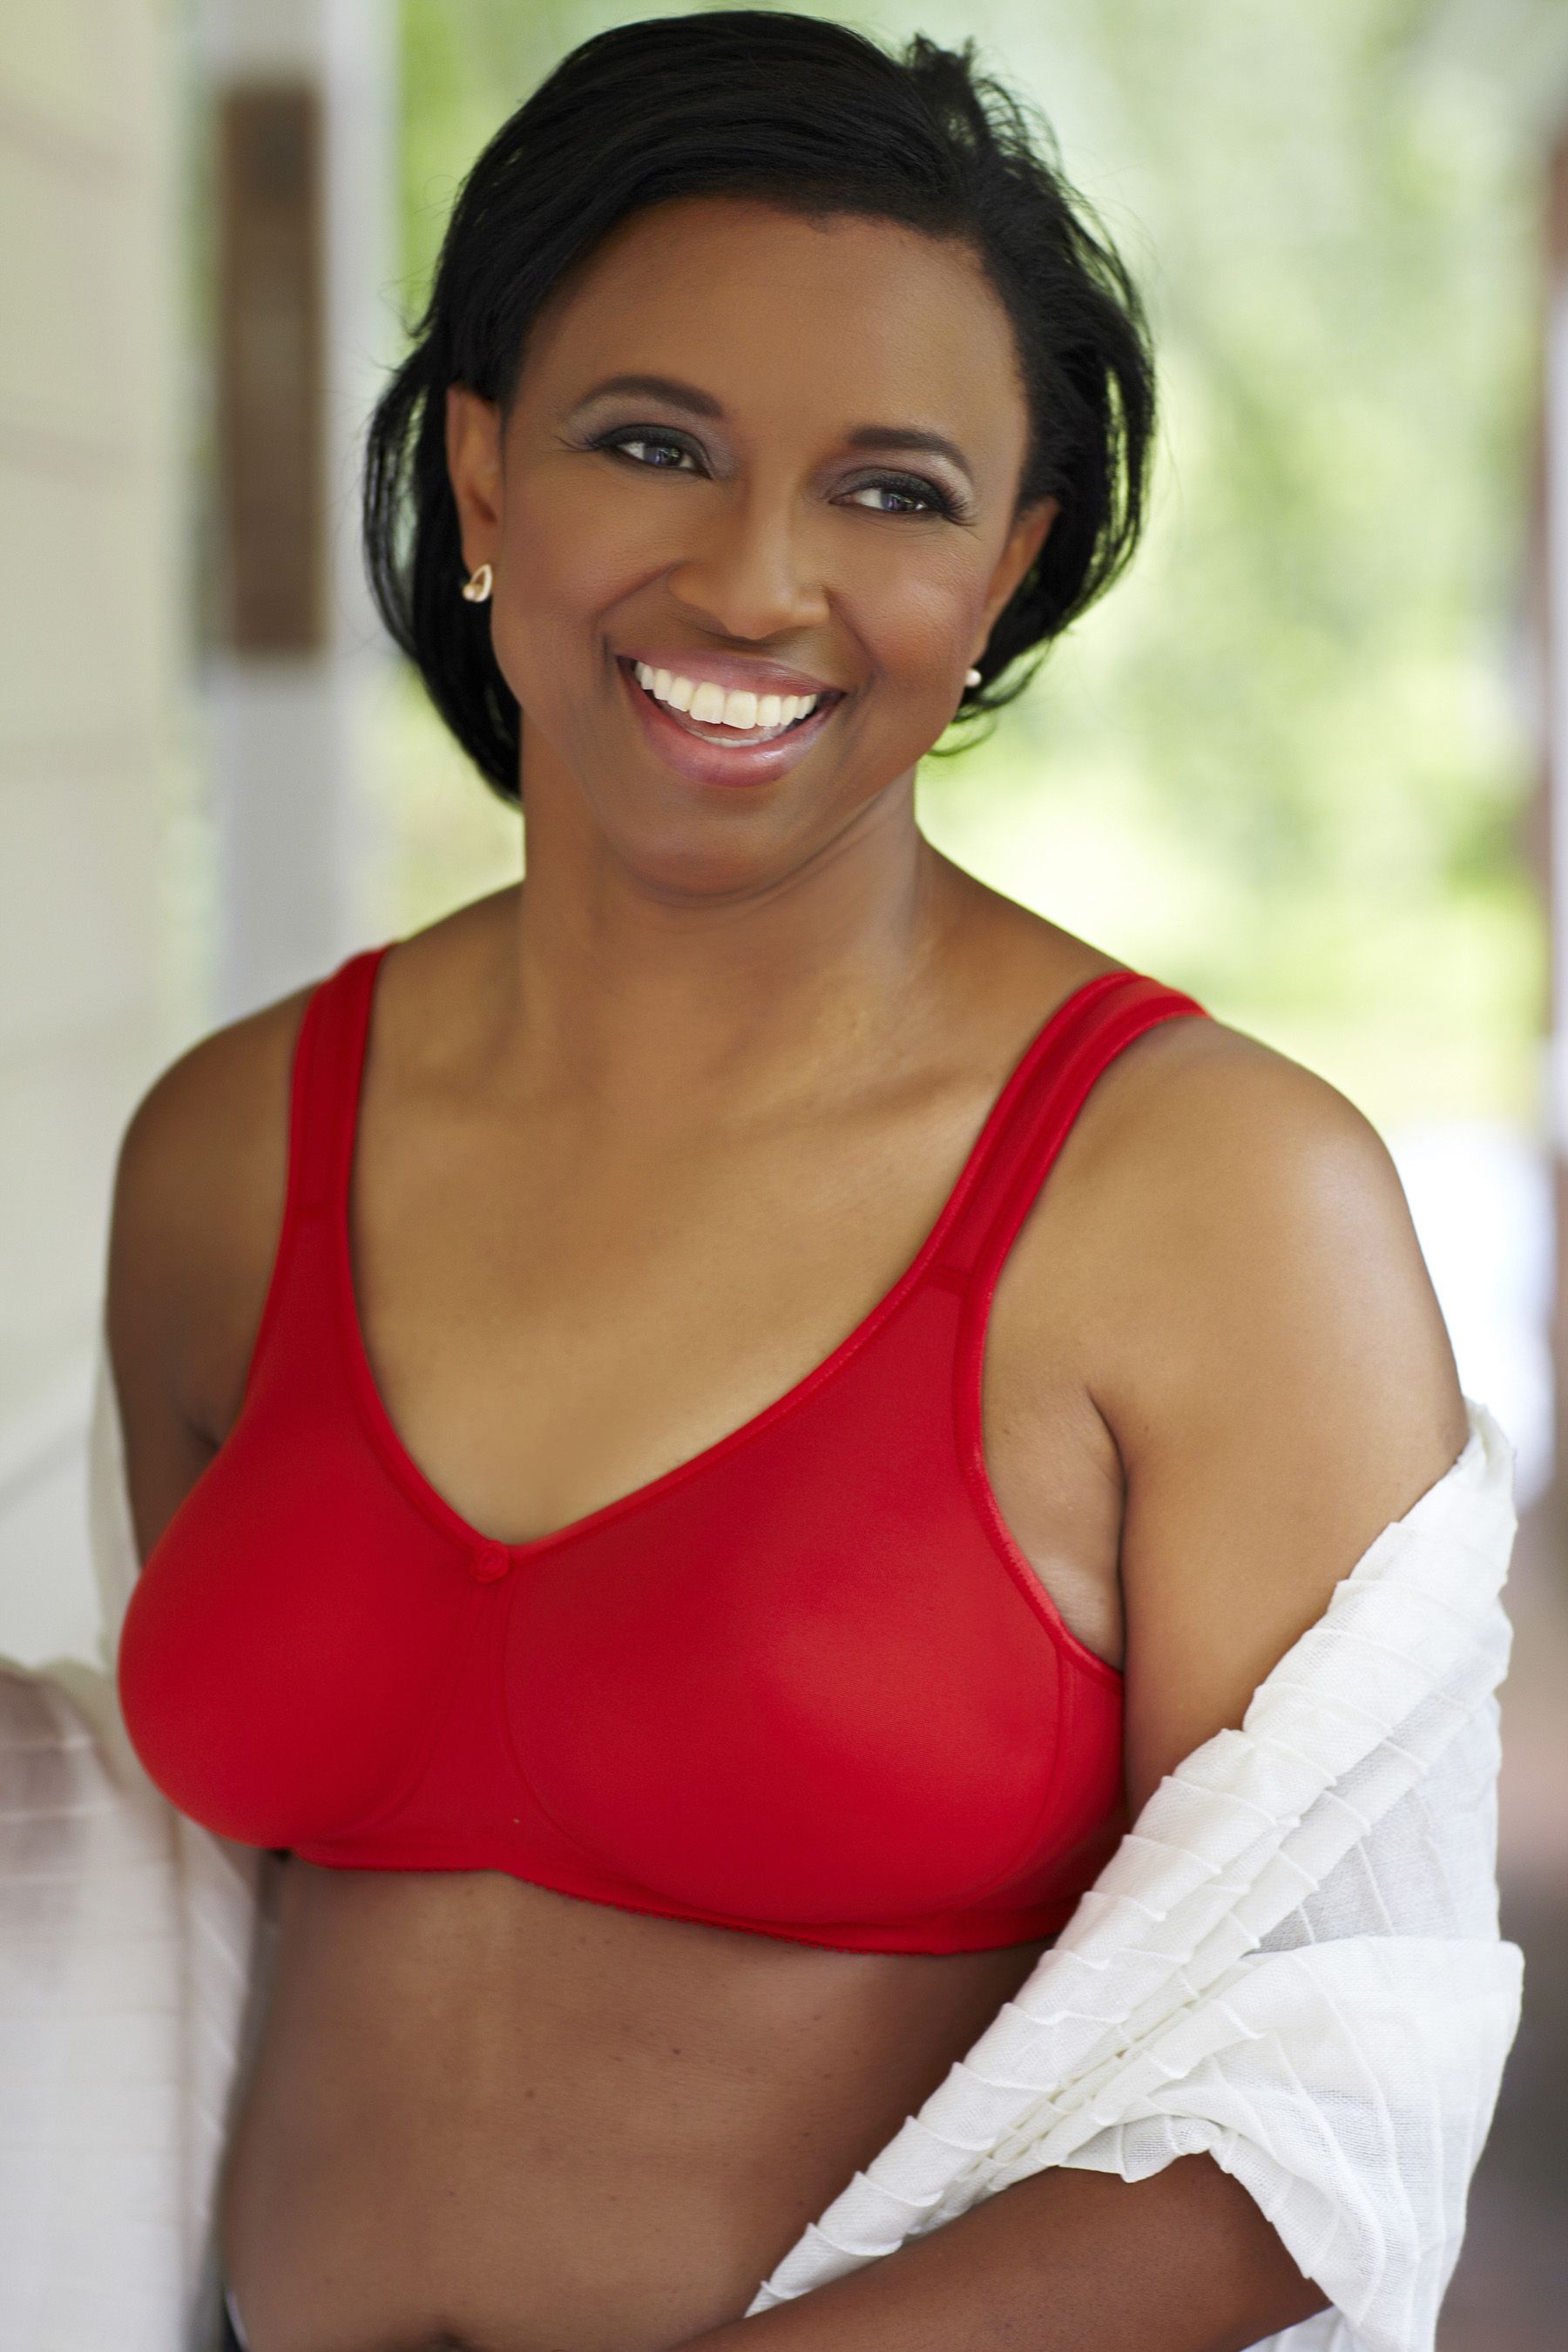 American Breast Care Soft Shape Mastectomy Bra - Full Figure